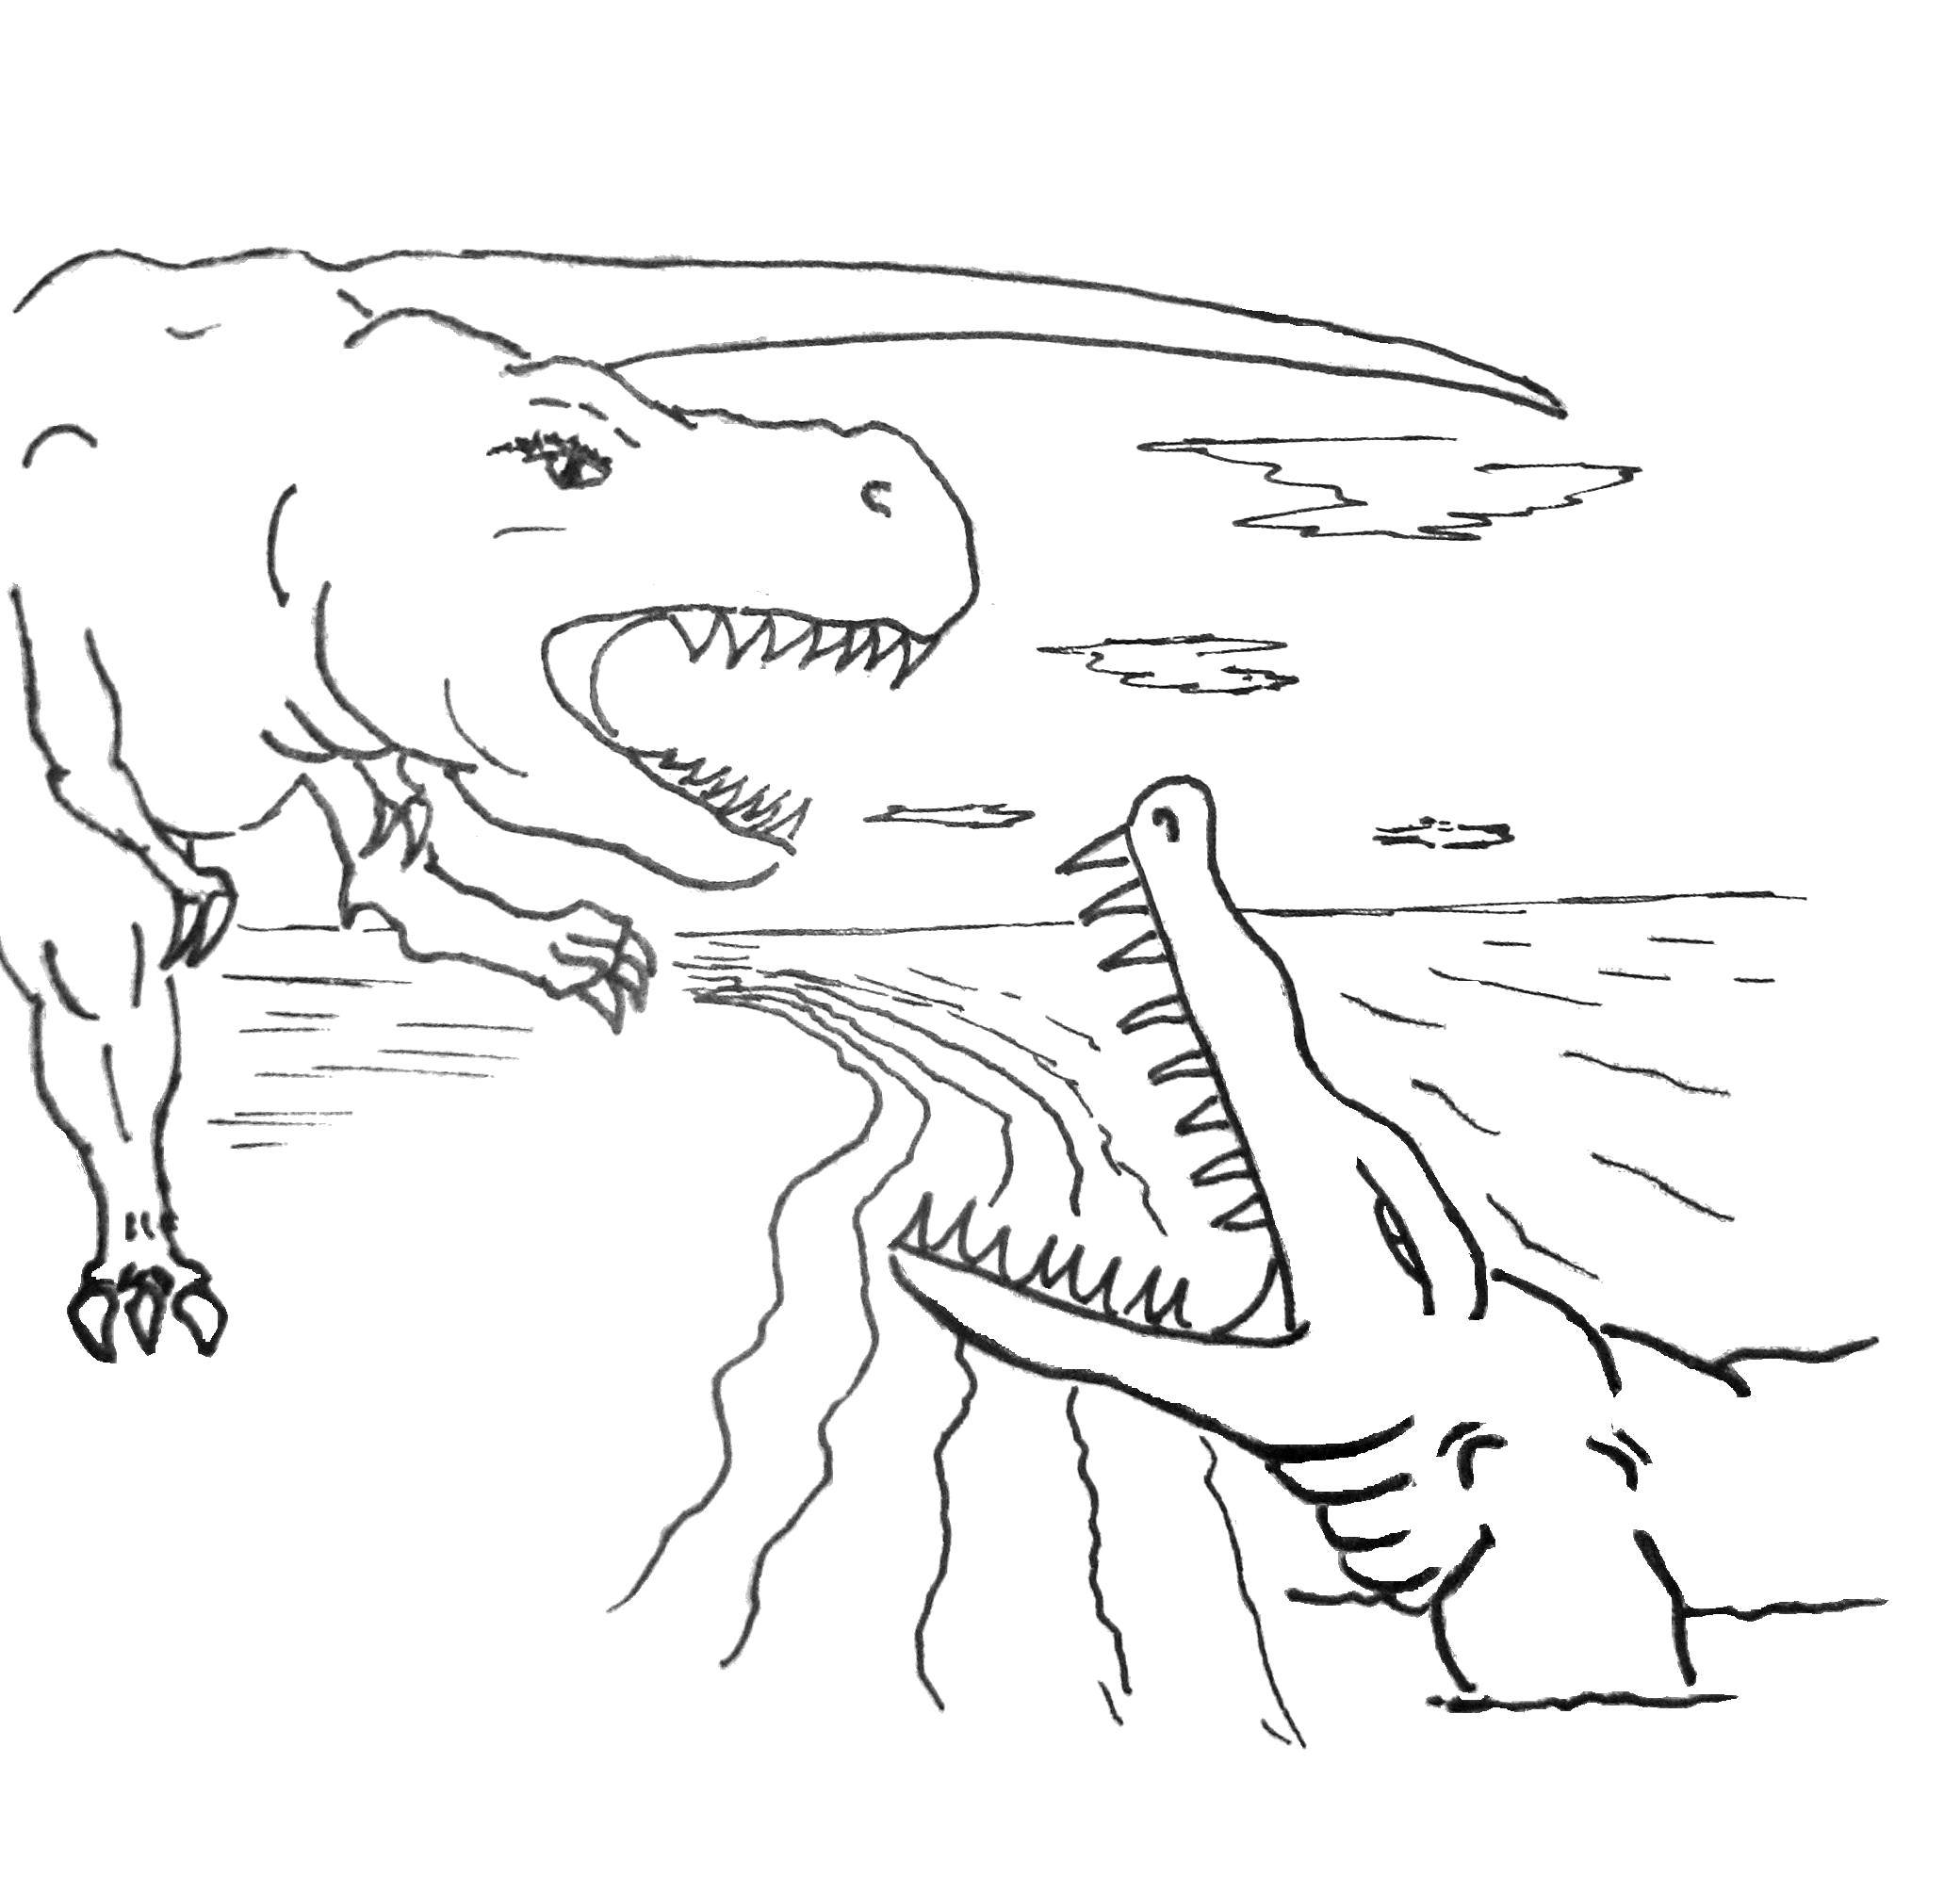 Coloring Fight dinosaurs. Category dinosaur. Tags:  Dinosaurs.